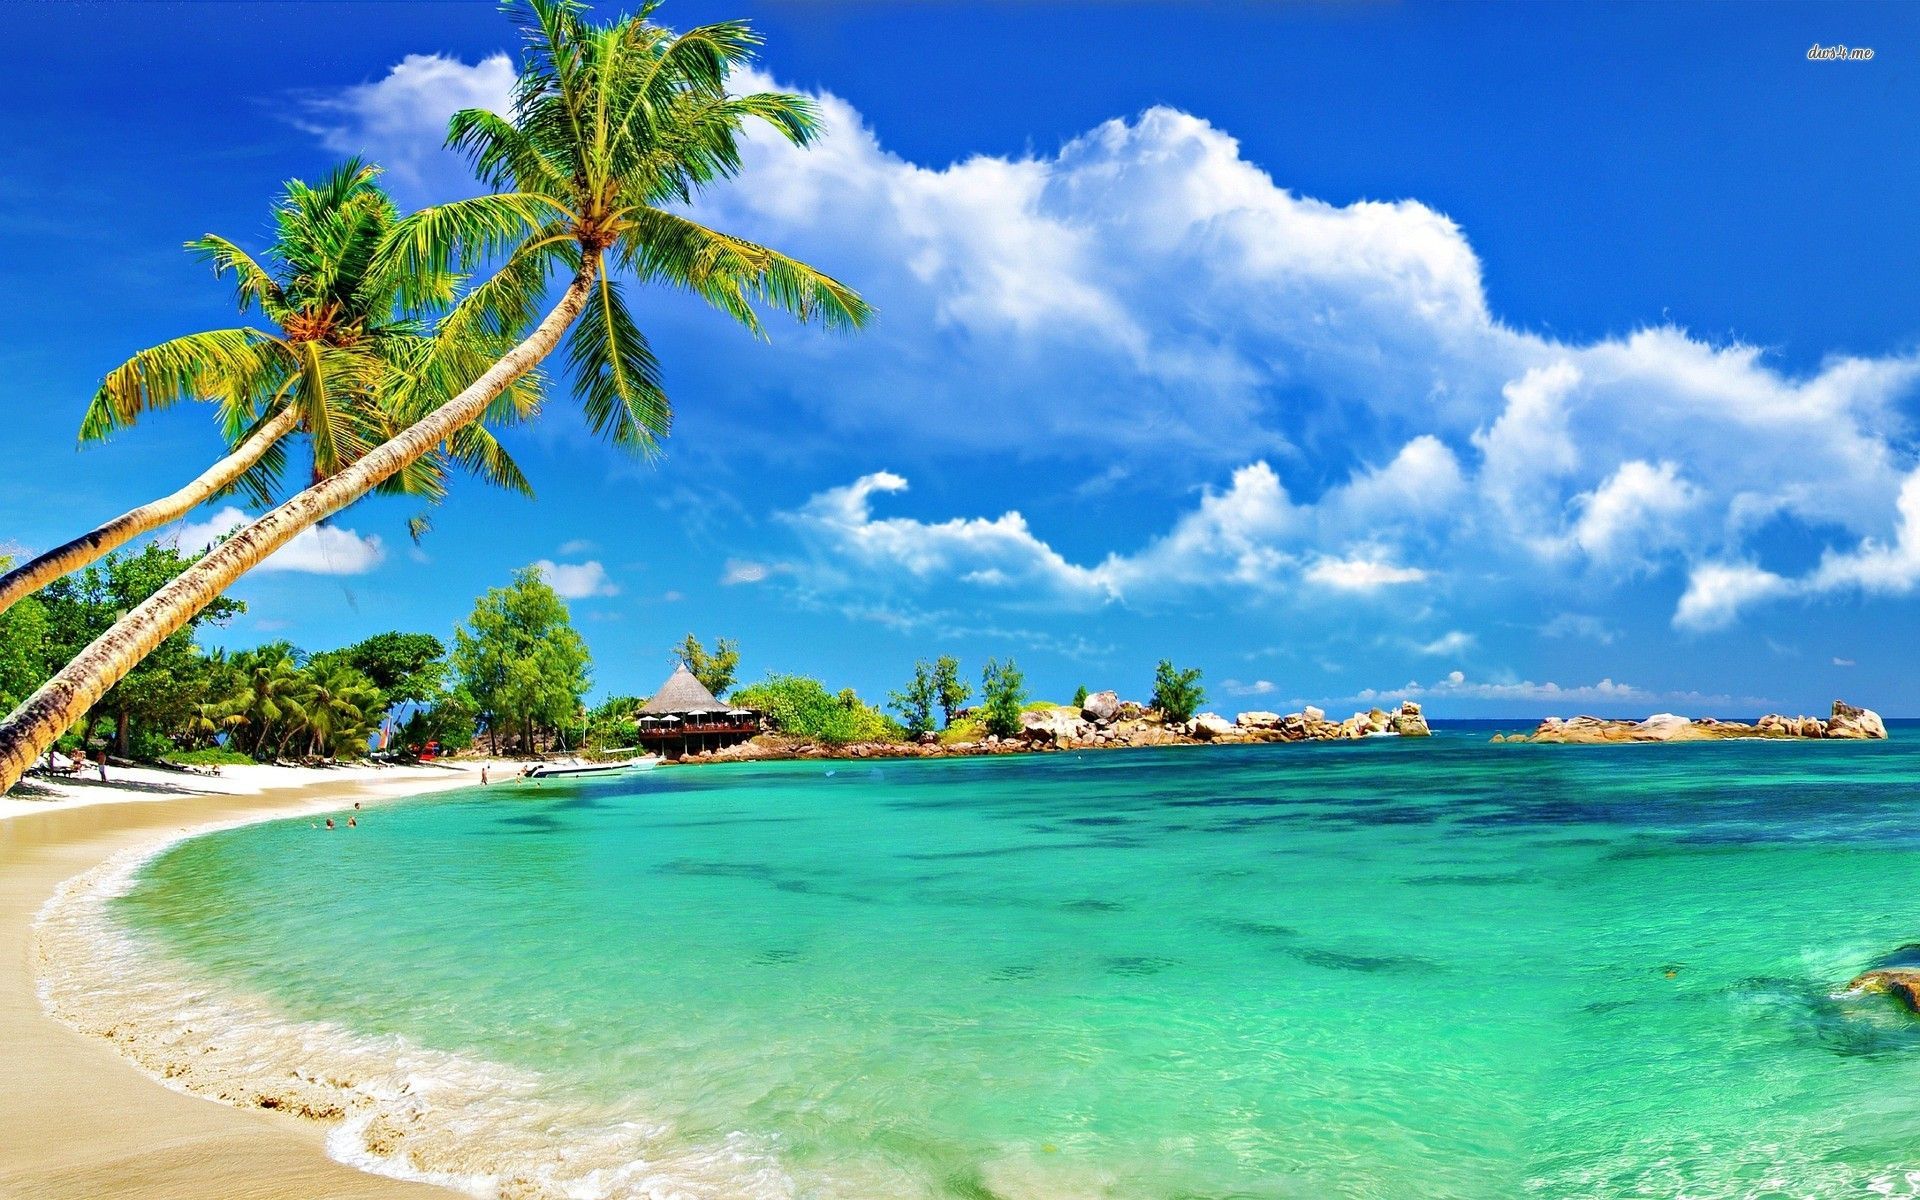 Jamaica Beach Background